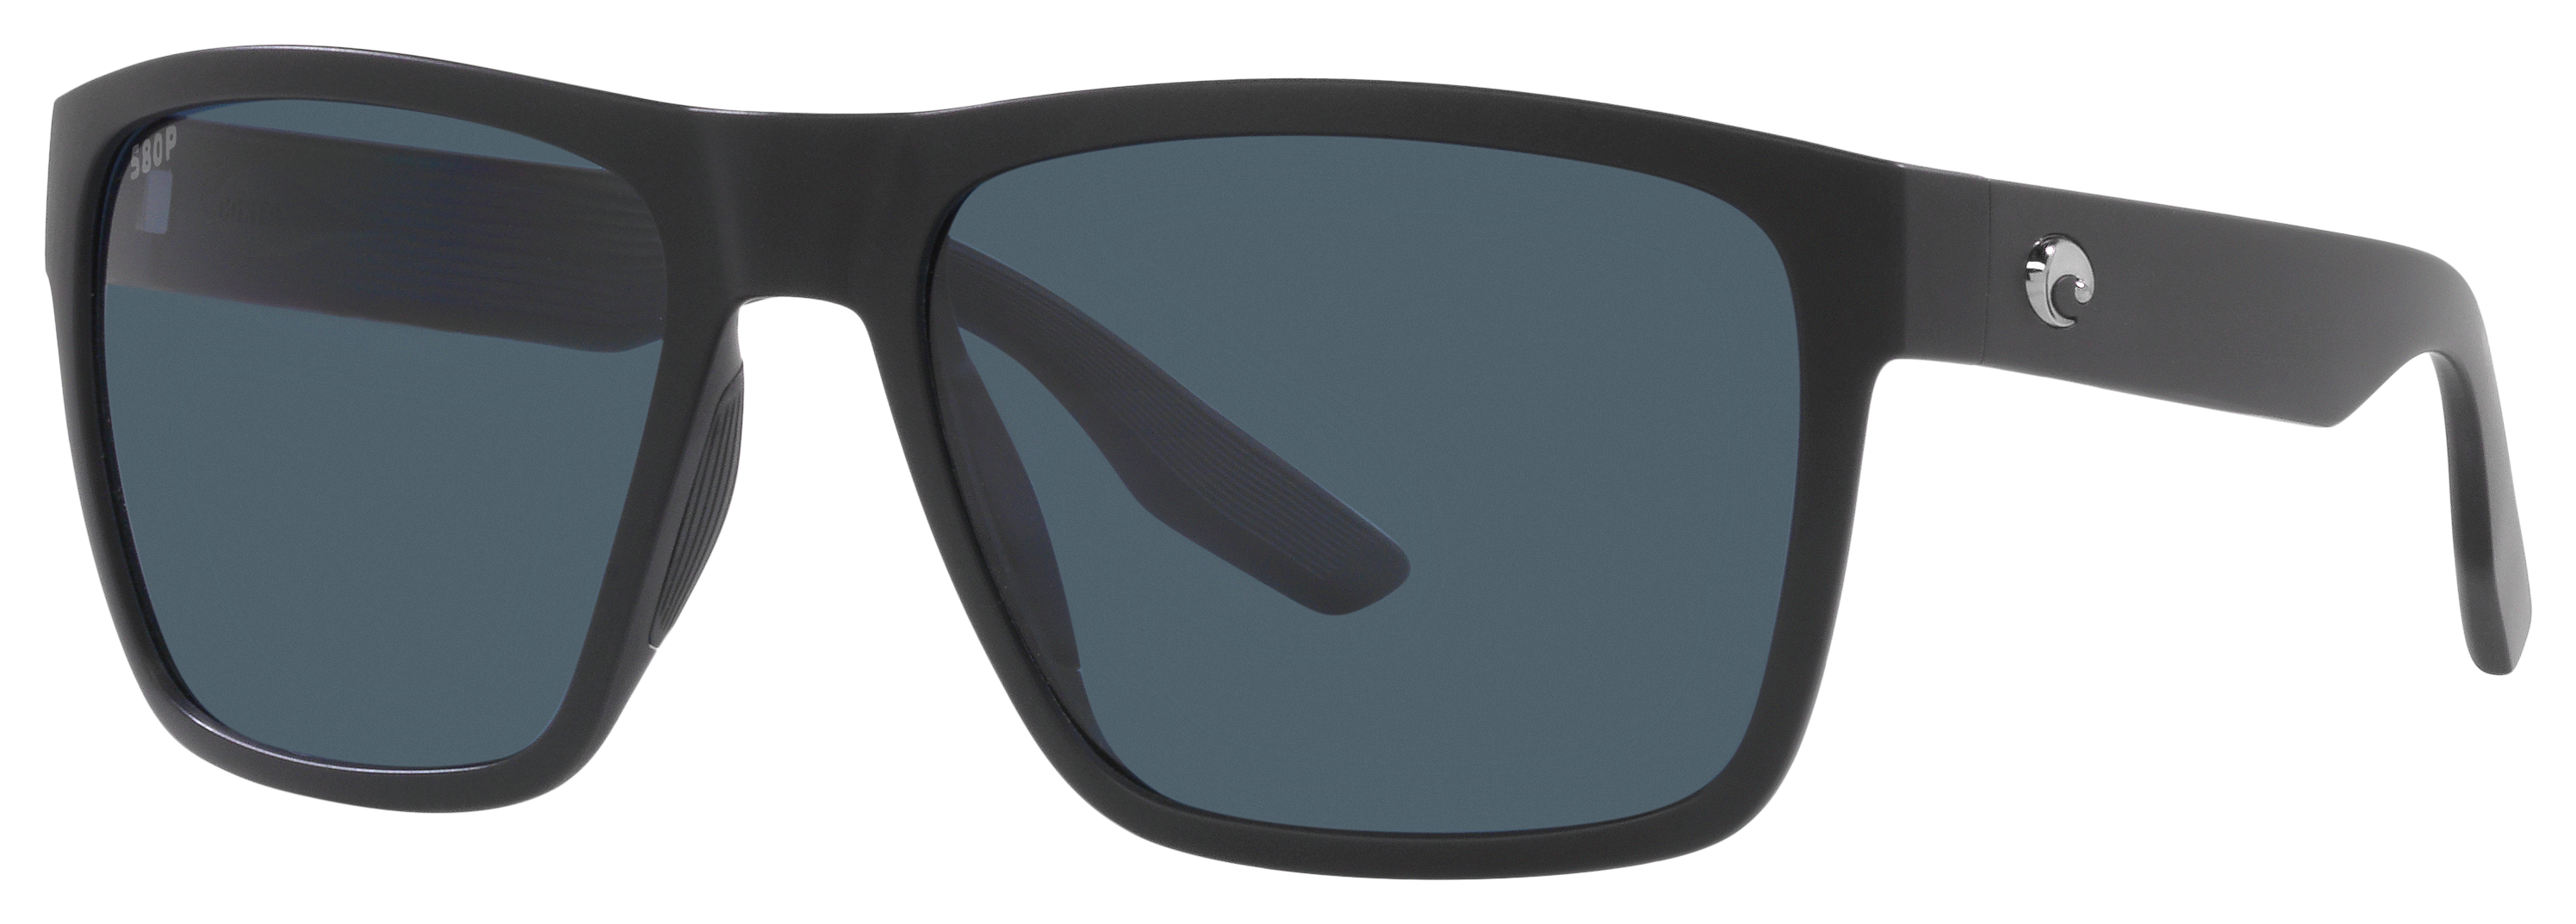 Costa Del Mar Paunch XL 580P Polarized Sunglasses - Matte Black/Gray - XX-Large